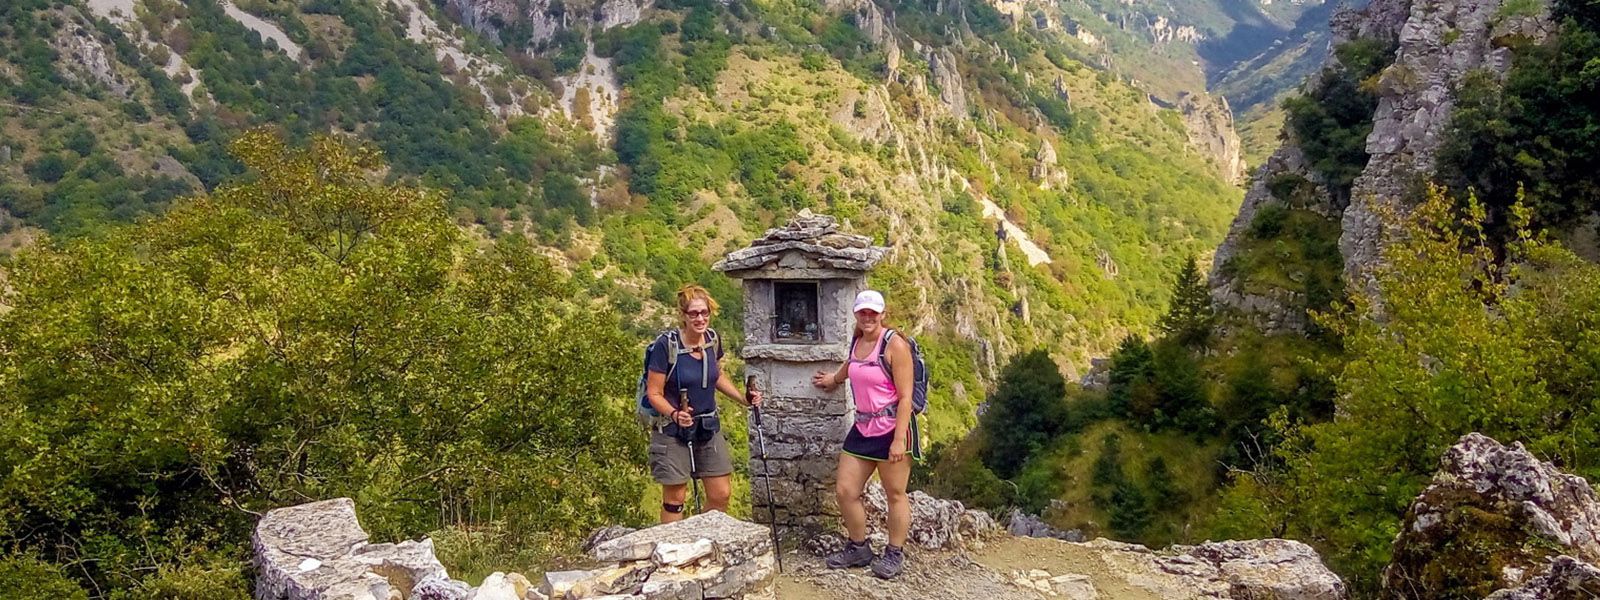 Hiking / Trekking the Highlights of Zagori villages at Ioannina, Greece